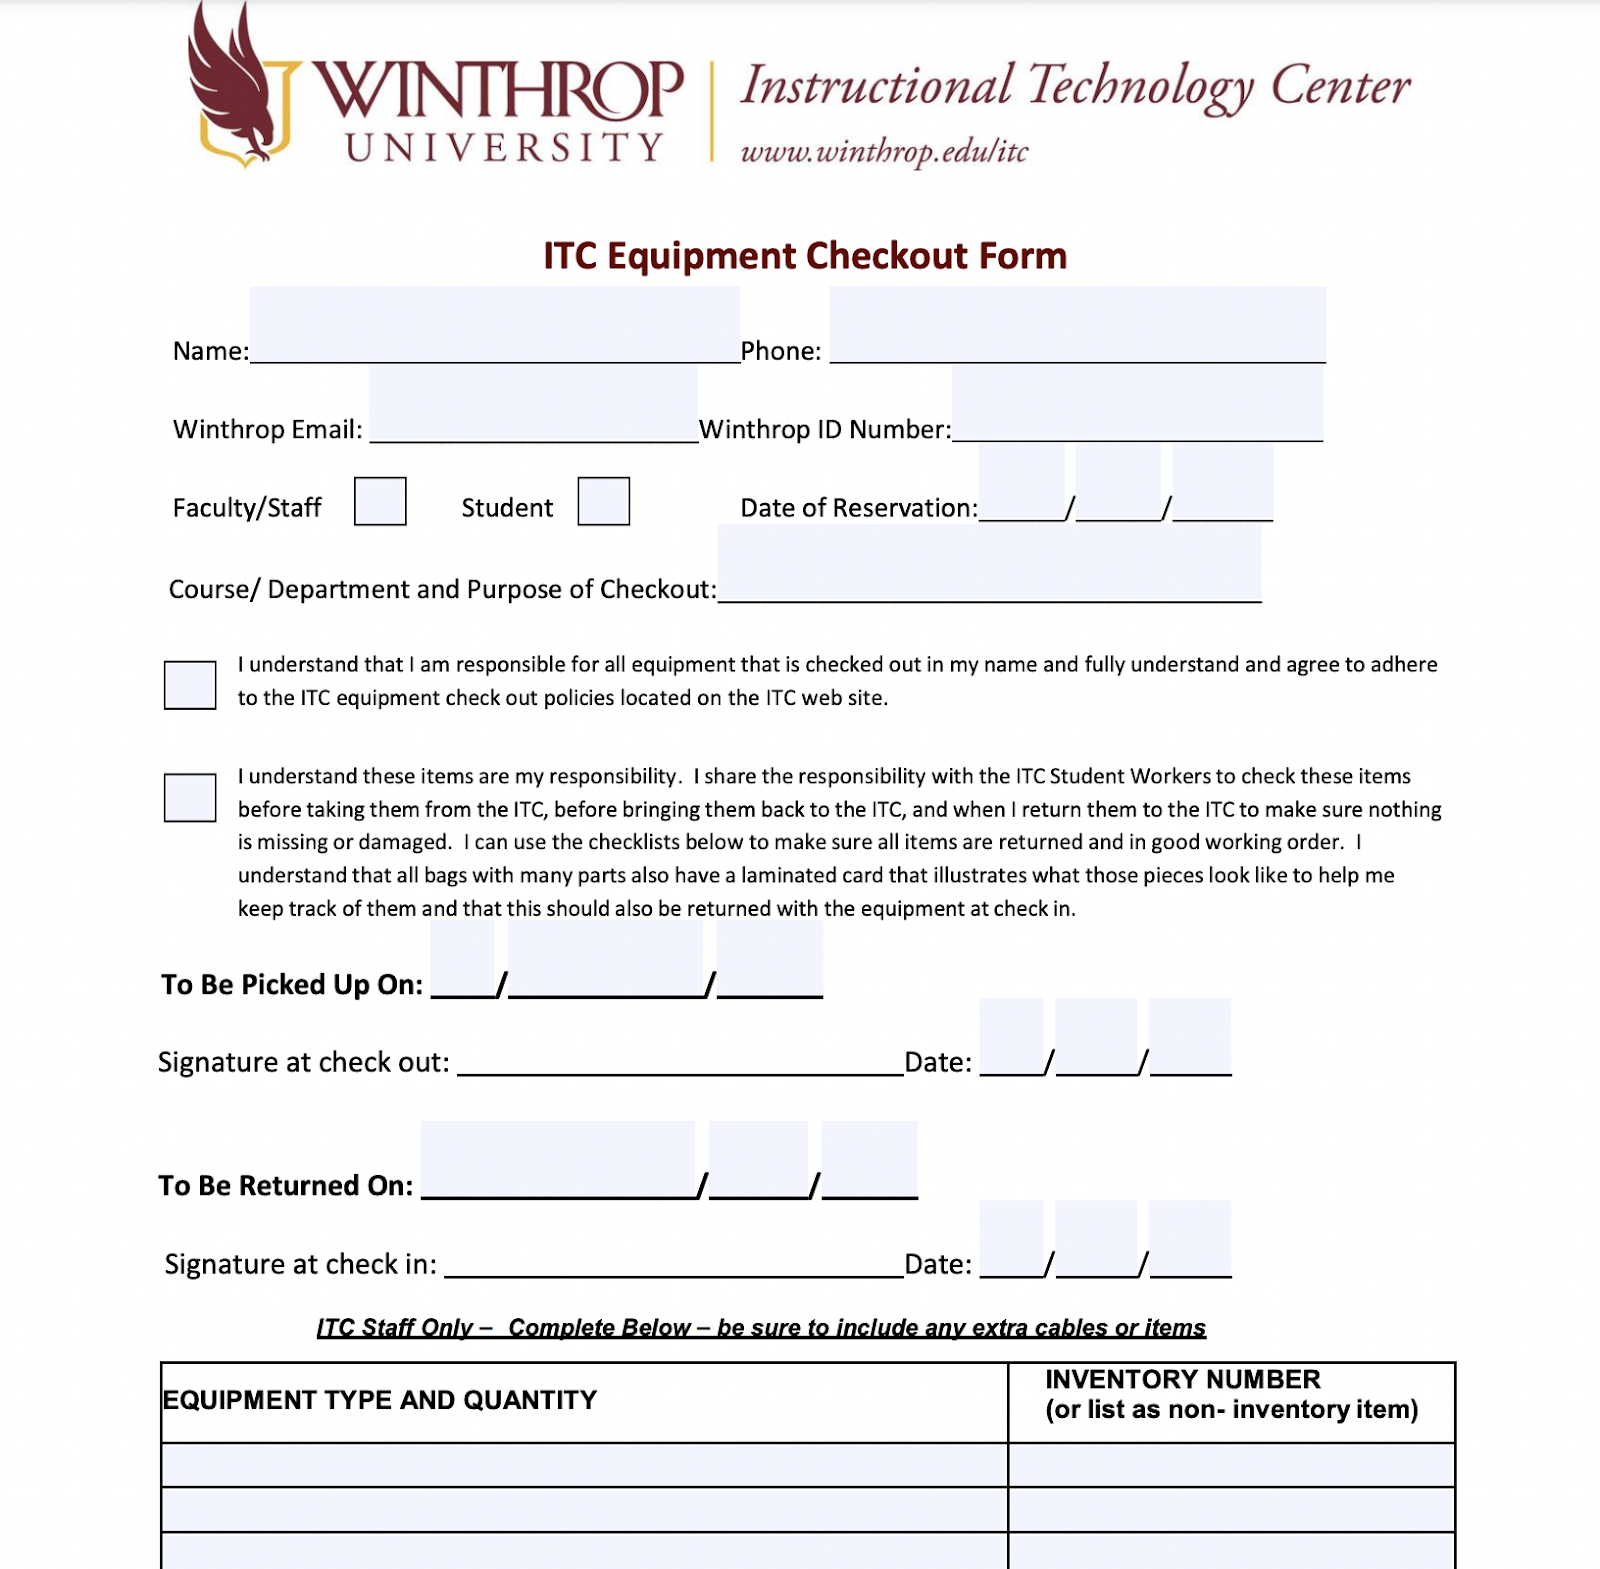 Winthrop University equipment checkout form